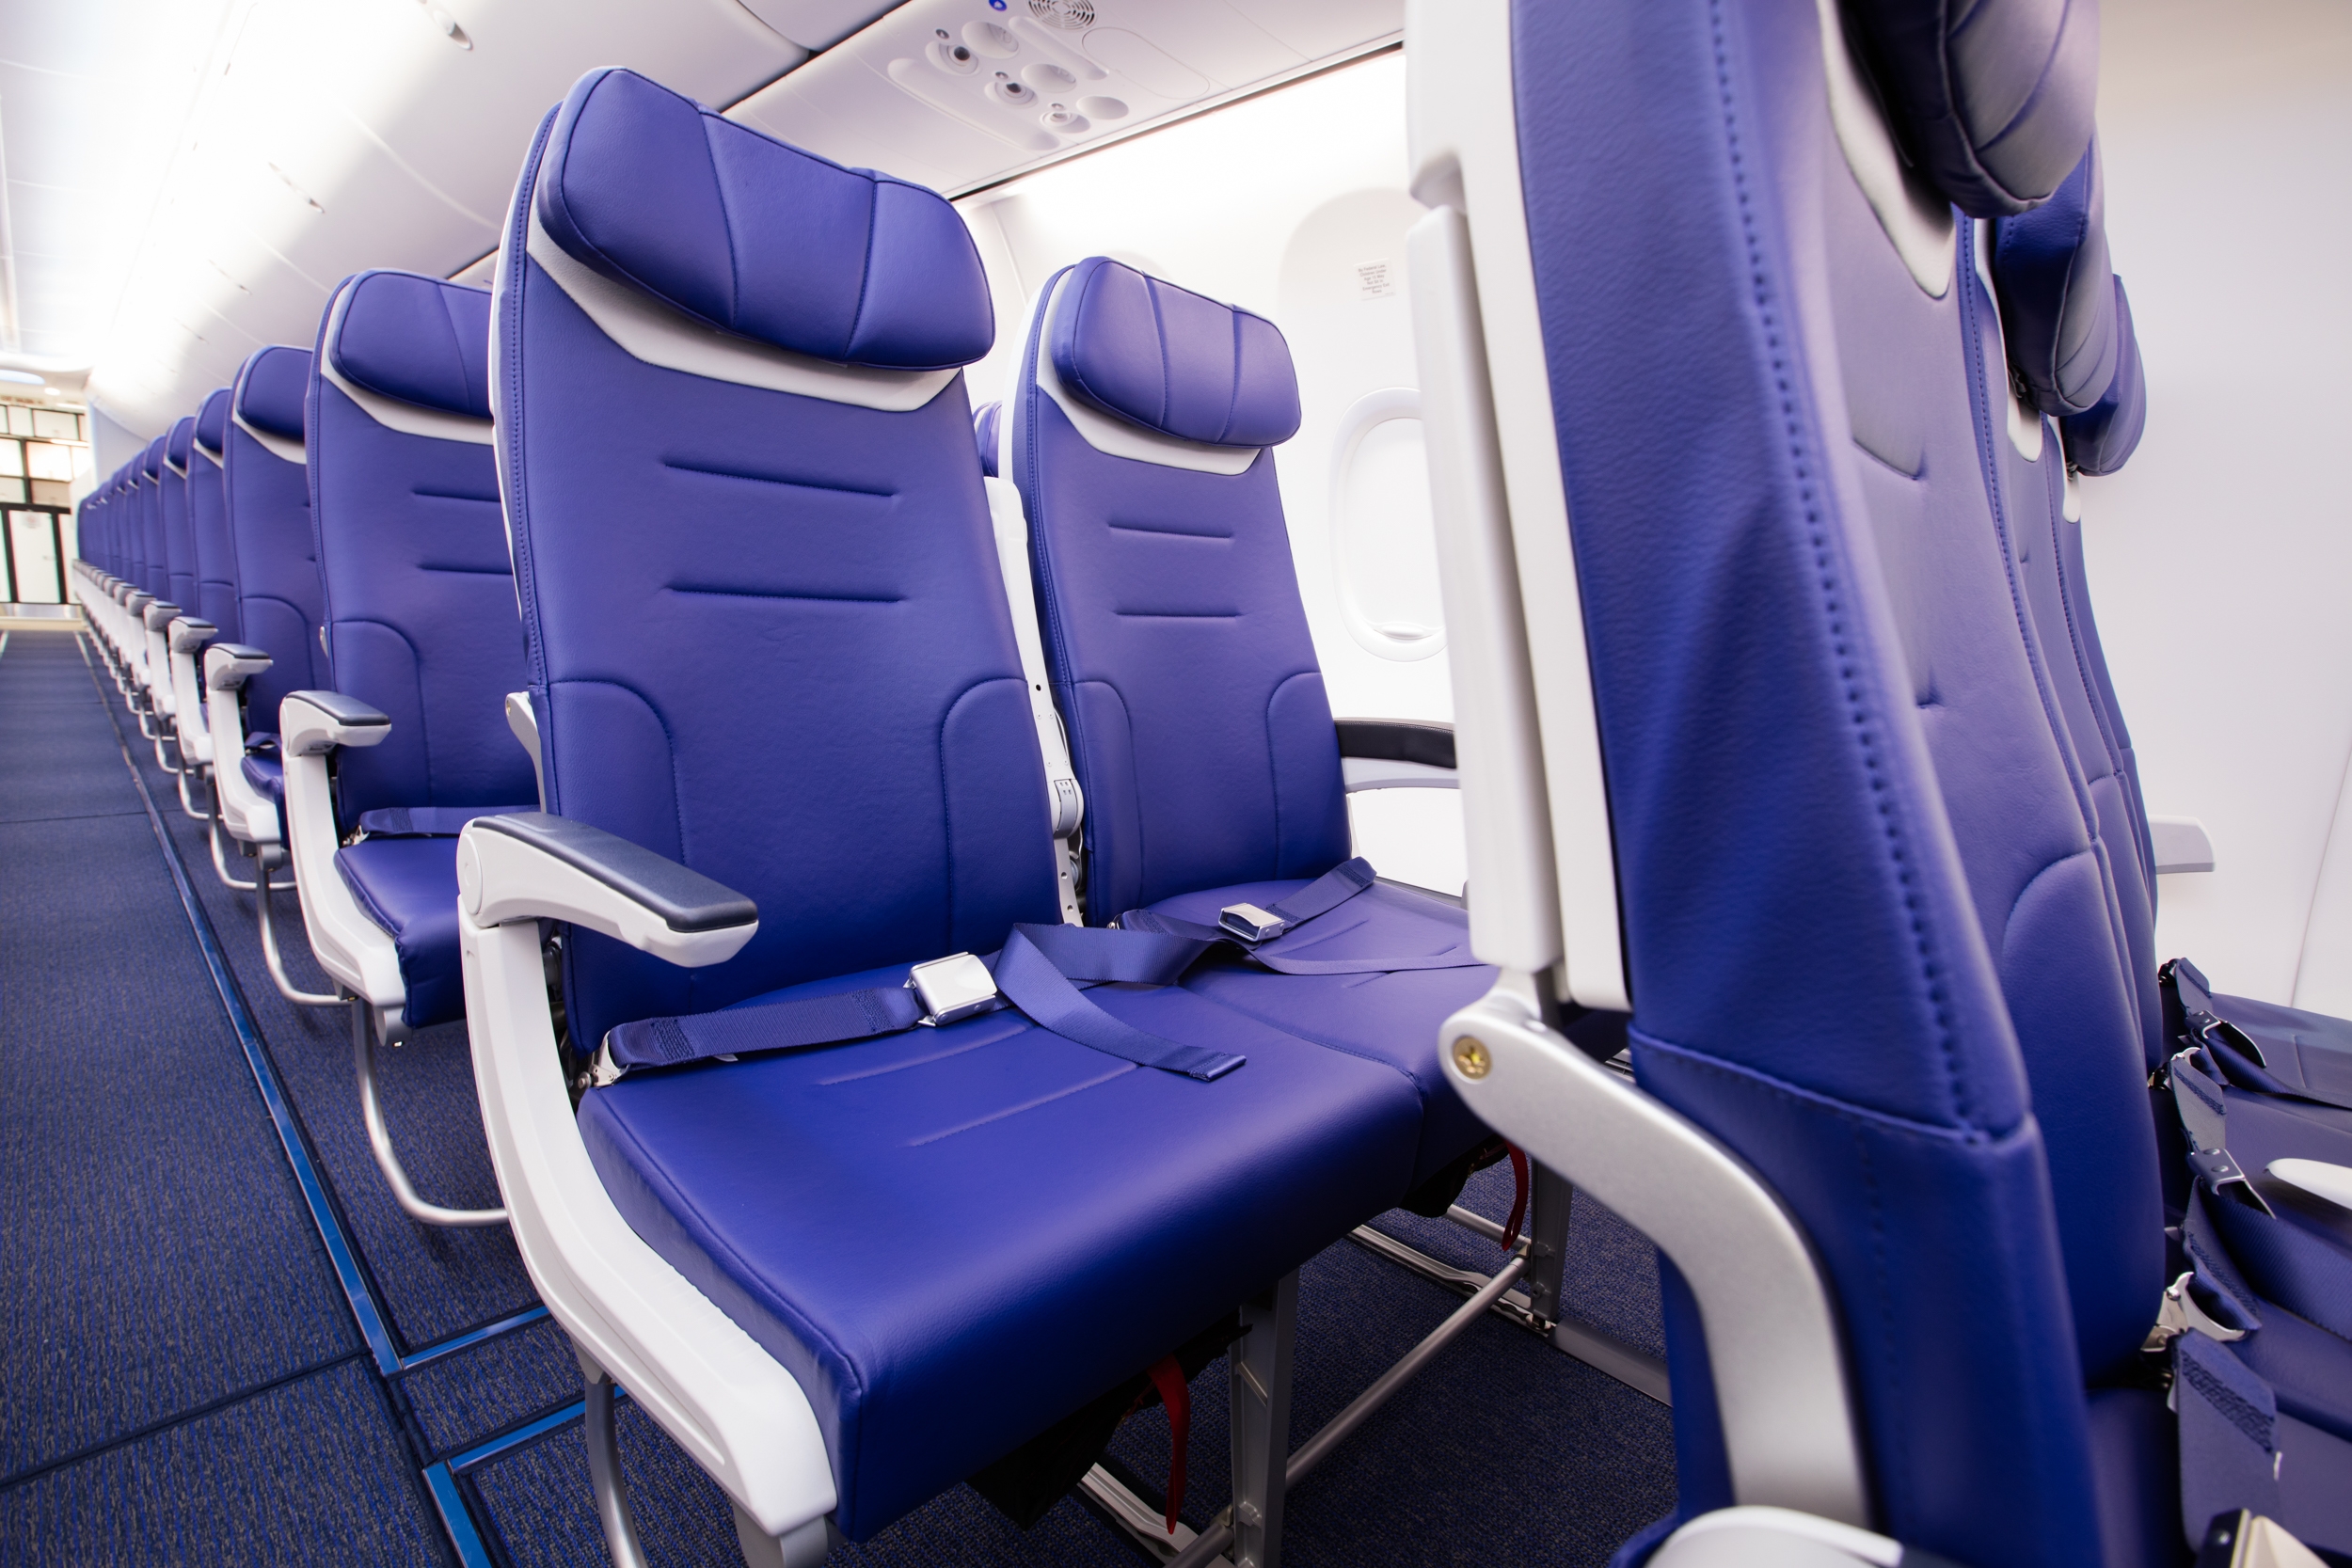 Southwest Unveils New Uniforms Widest 737 Economy Seat In